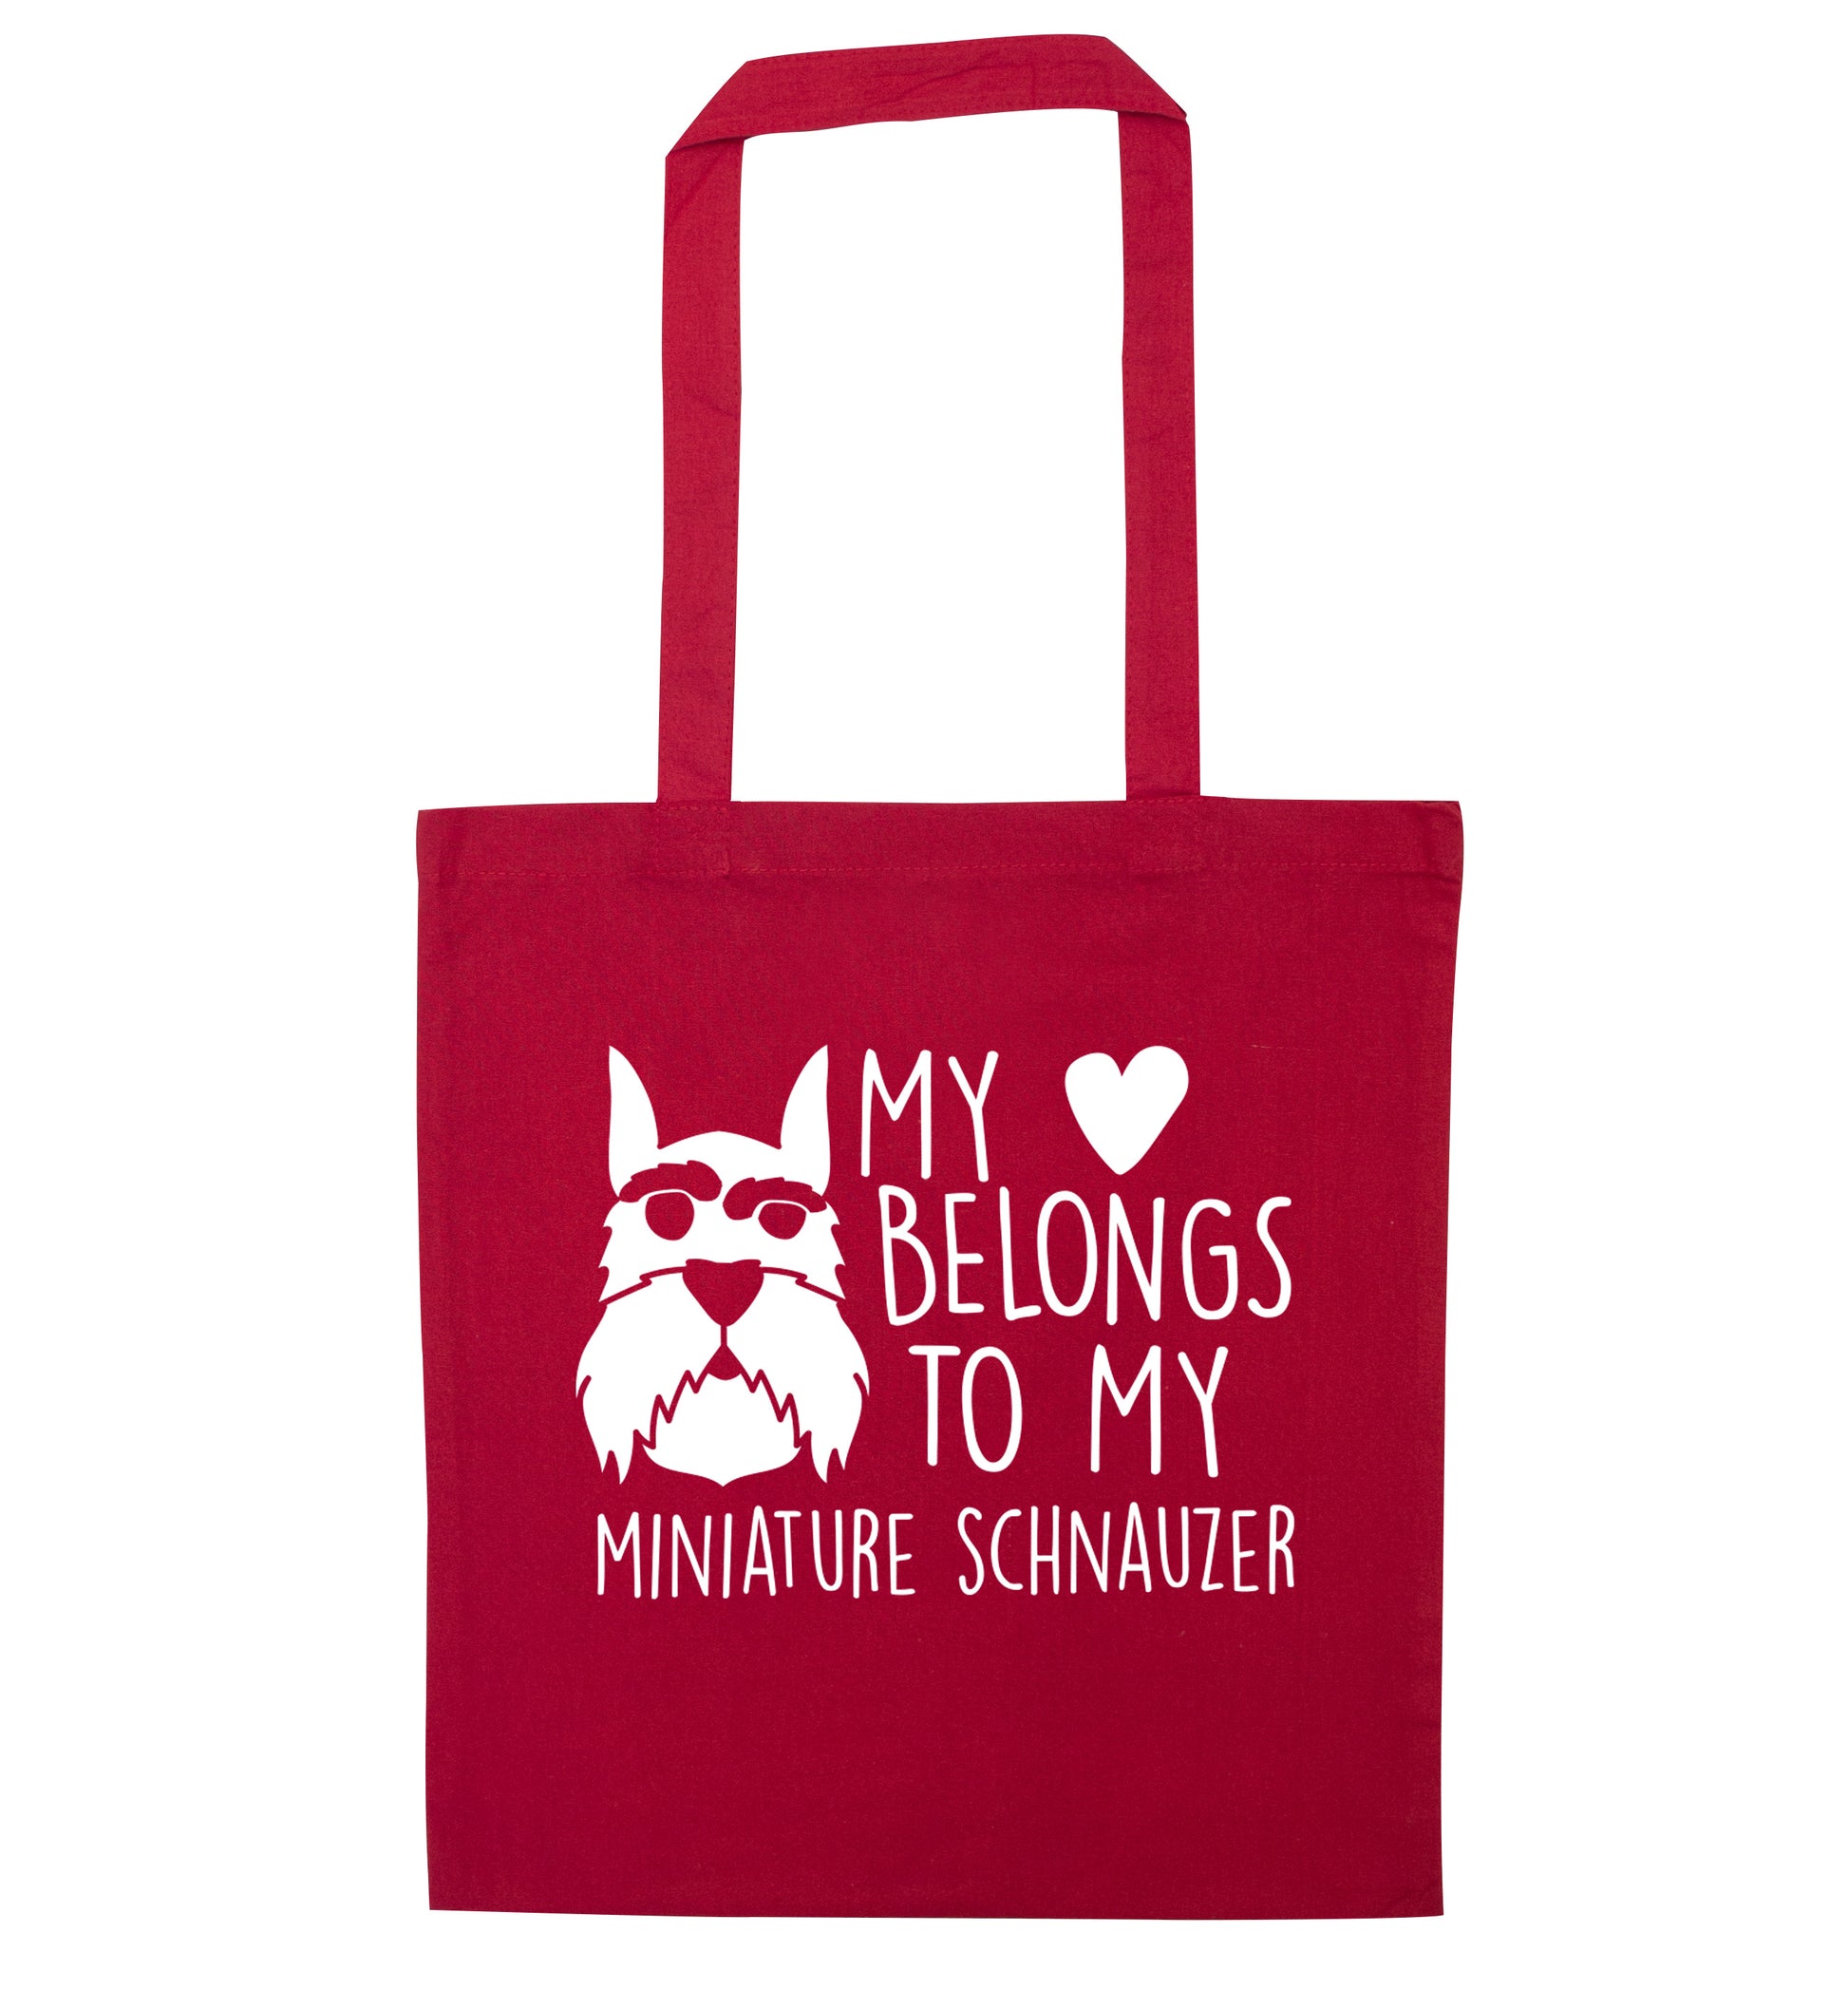 My heart belongs to my miniature schnauzer red tote bag